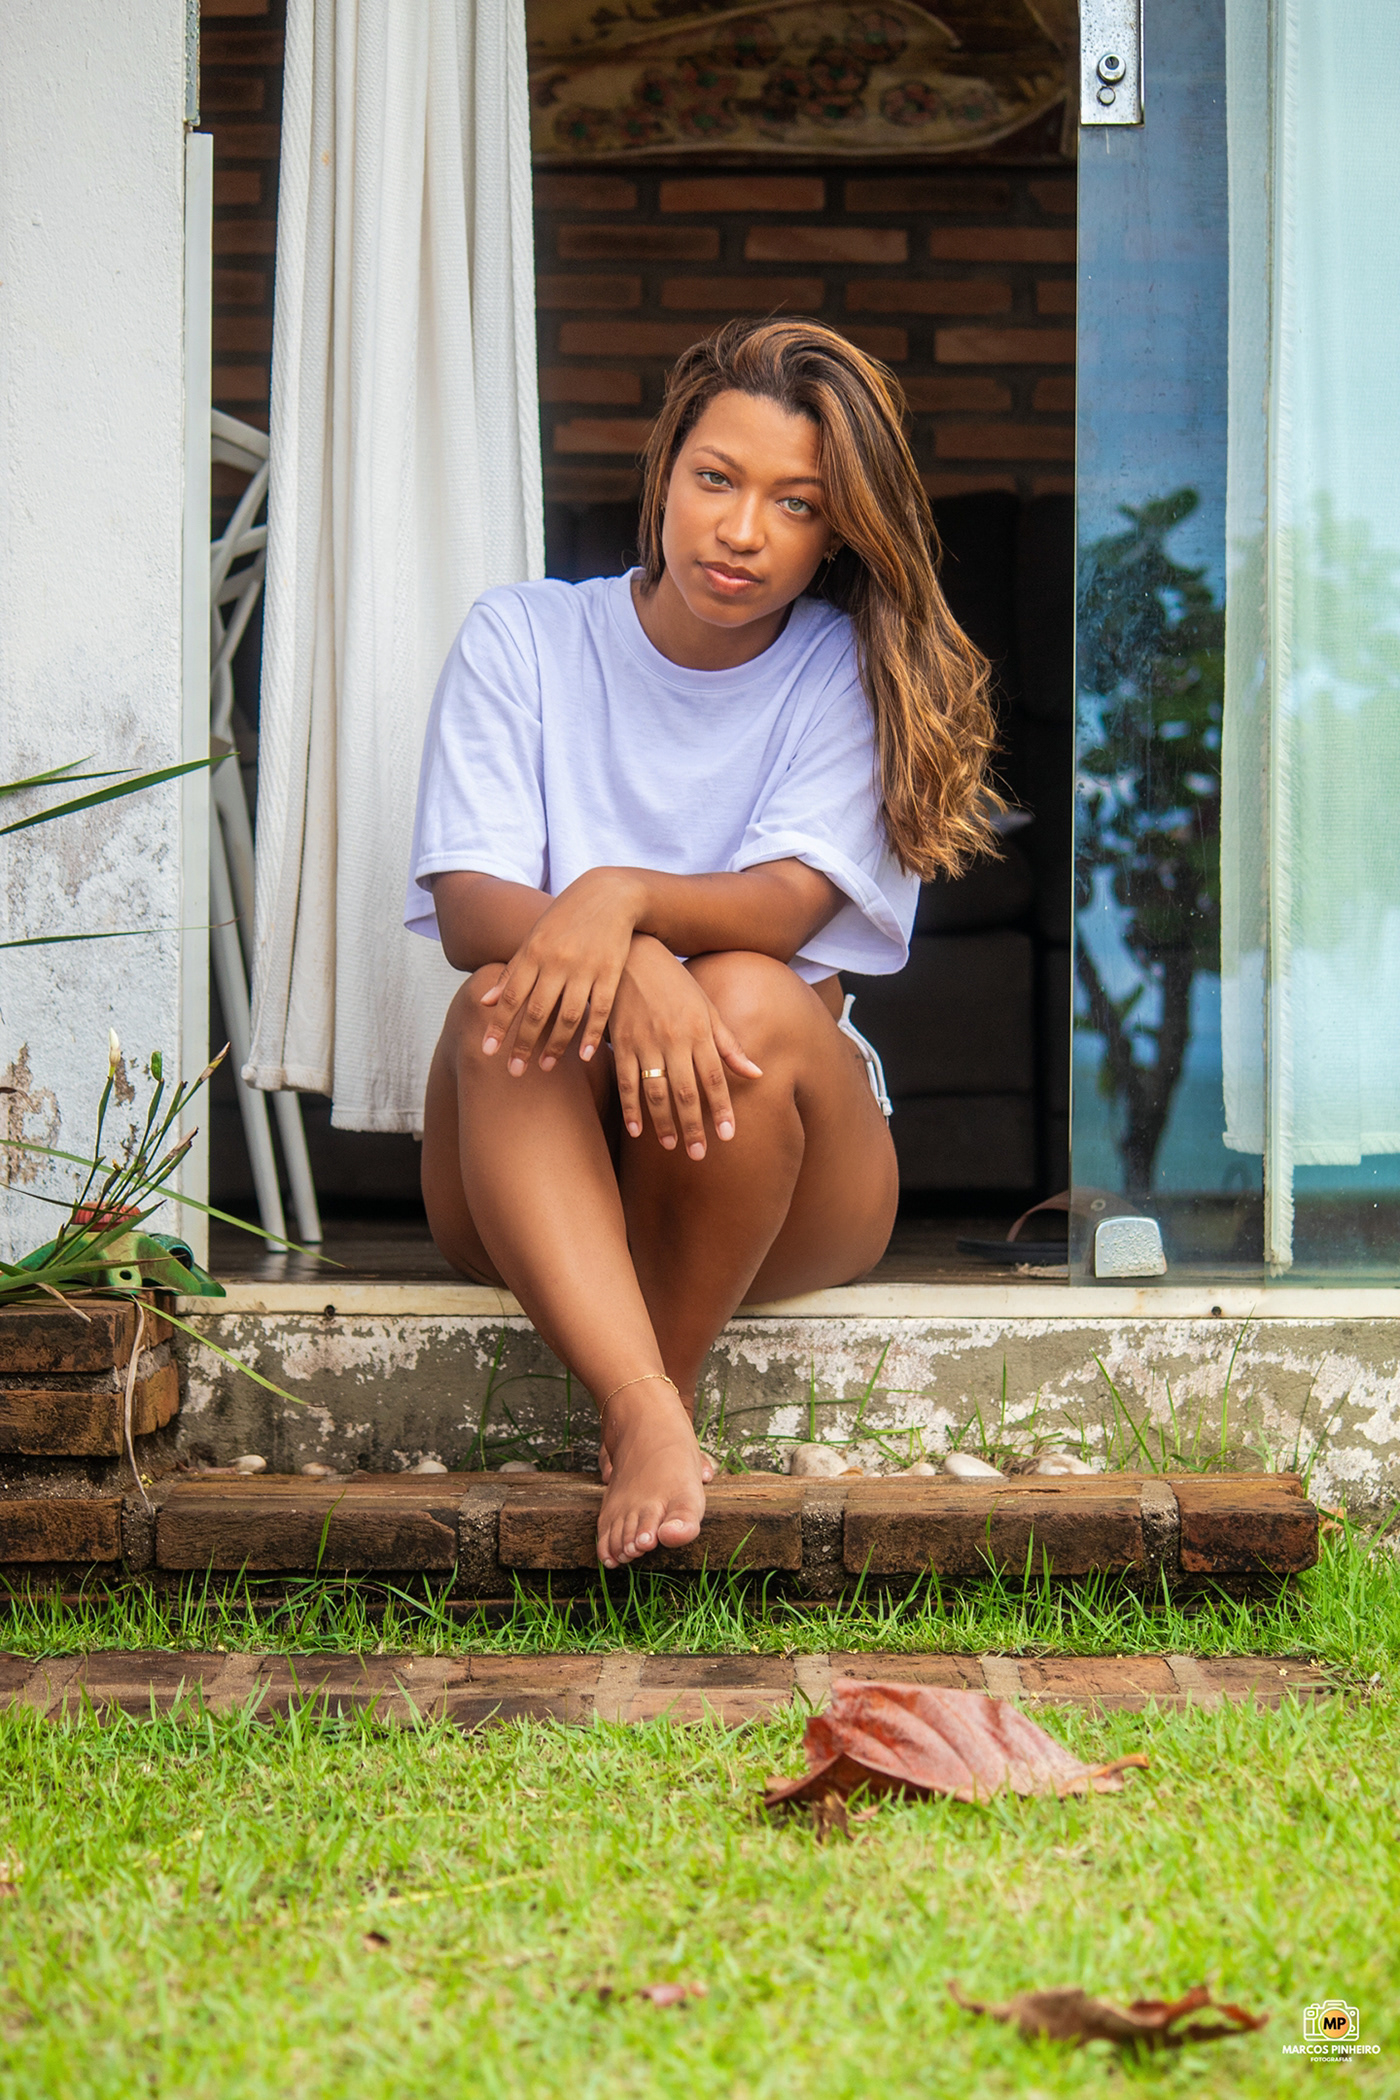 ensaio fotográfico ensaio feminino Alagoas airbnb experiences ensaio feminino externo Ensaio feminino interno ensaio feminino sensual